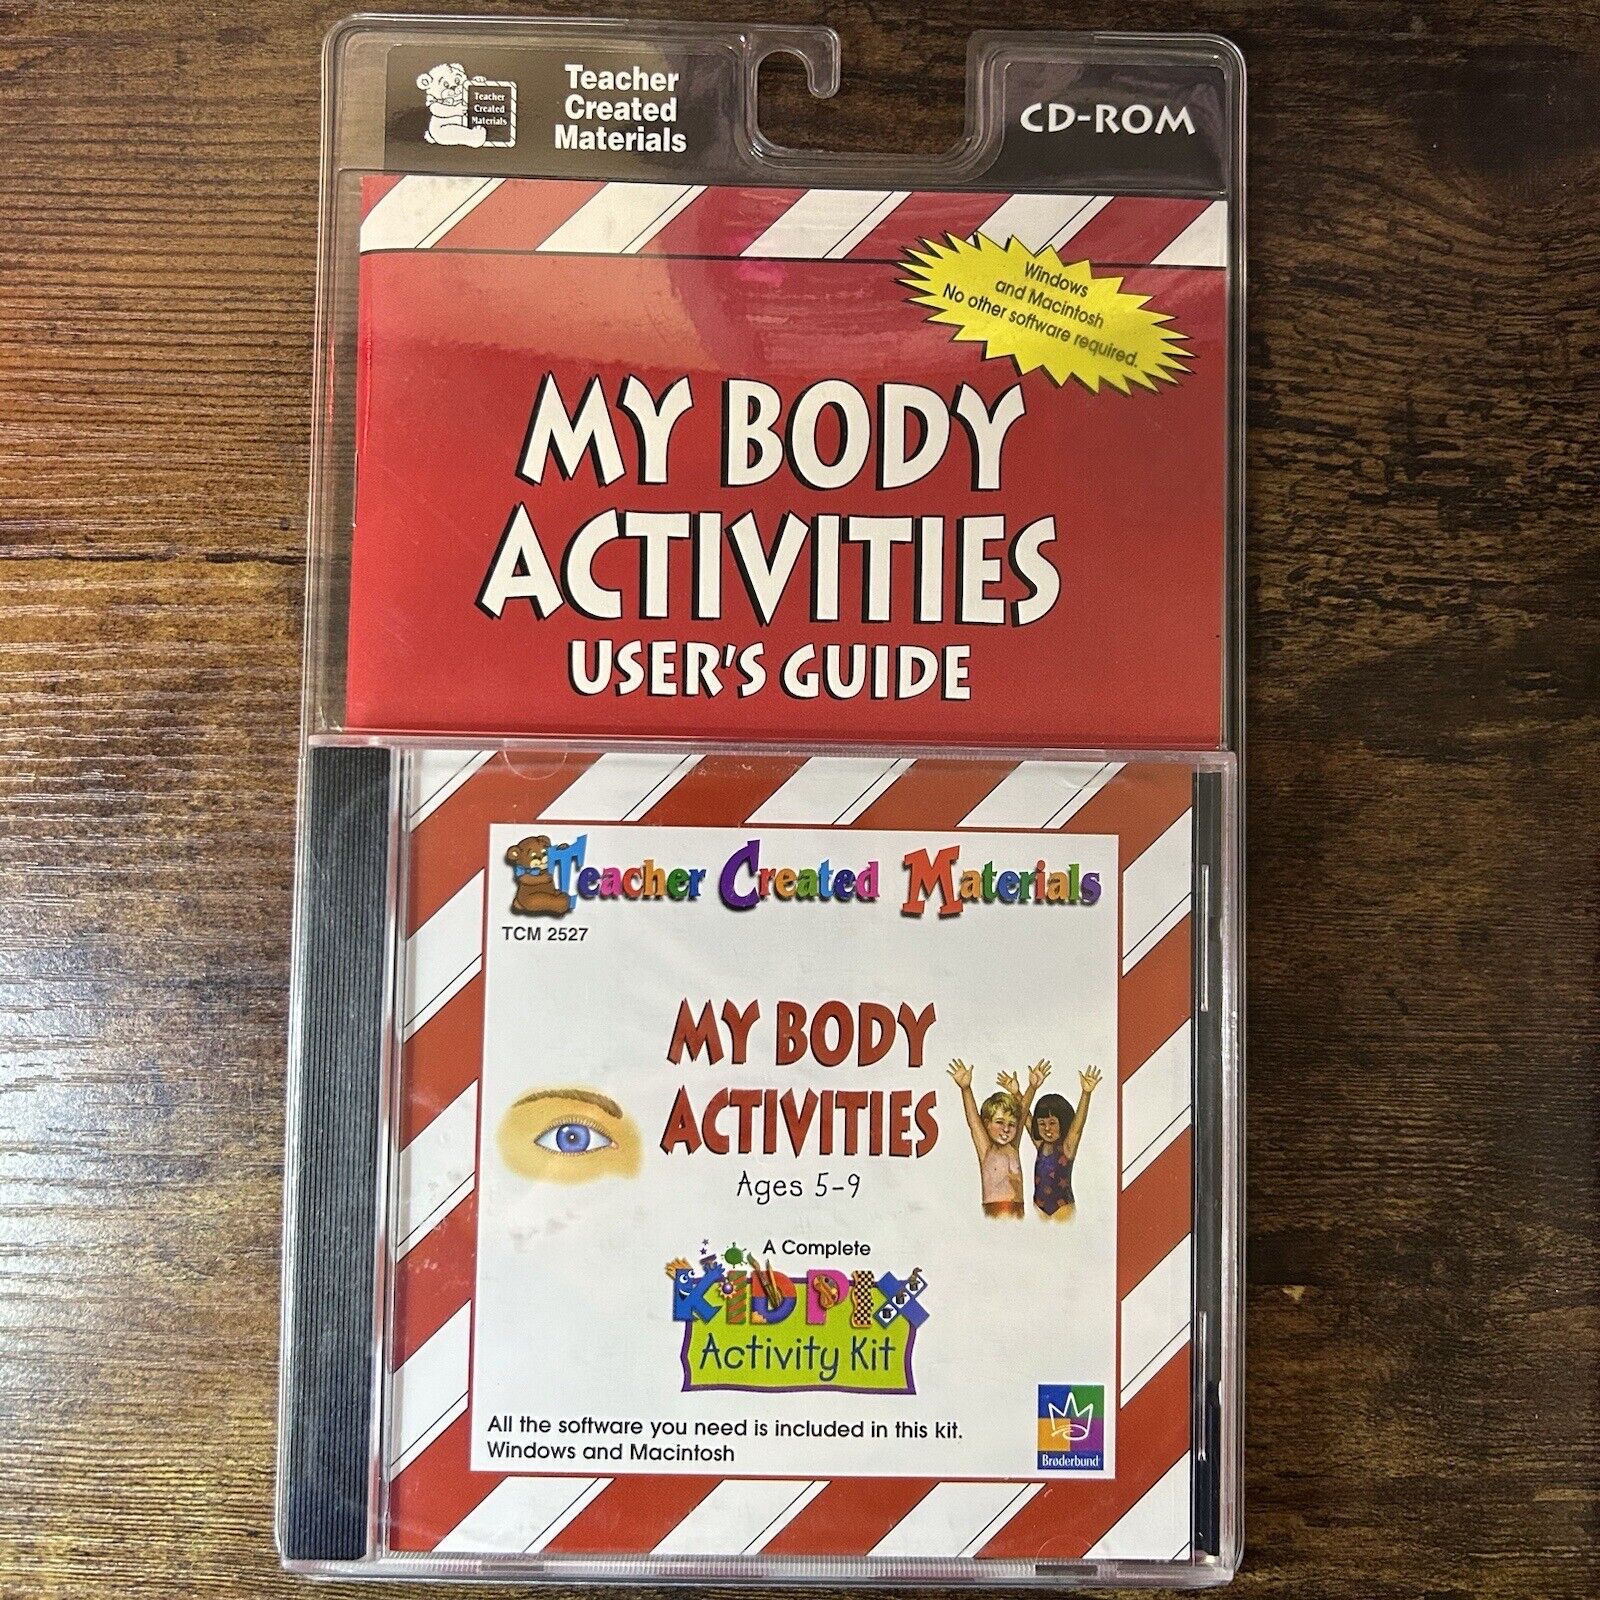 My Body Activities New CD Rom Teacher Created Materials Activity Kit